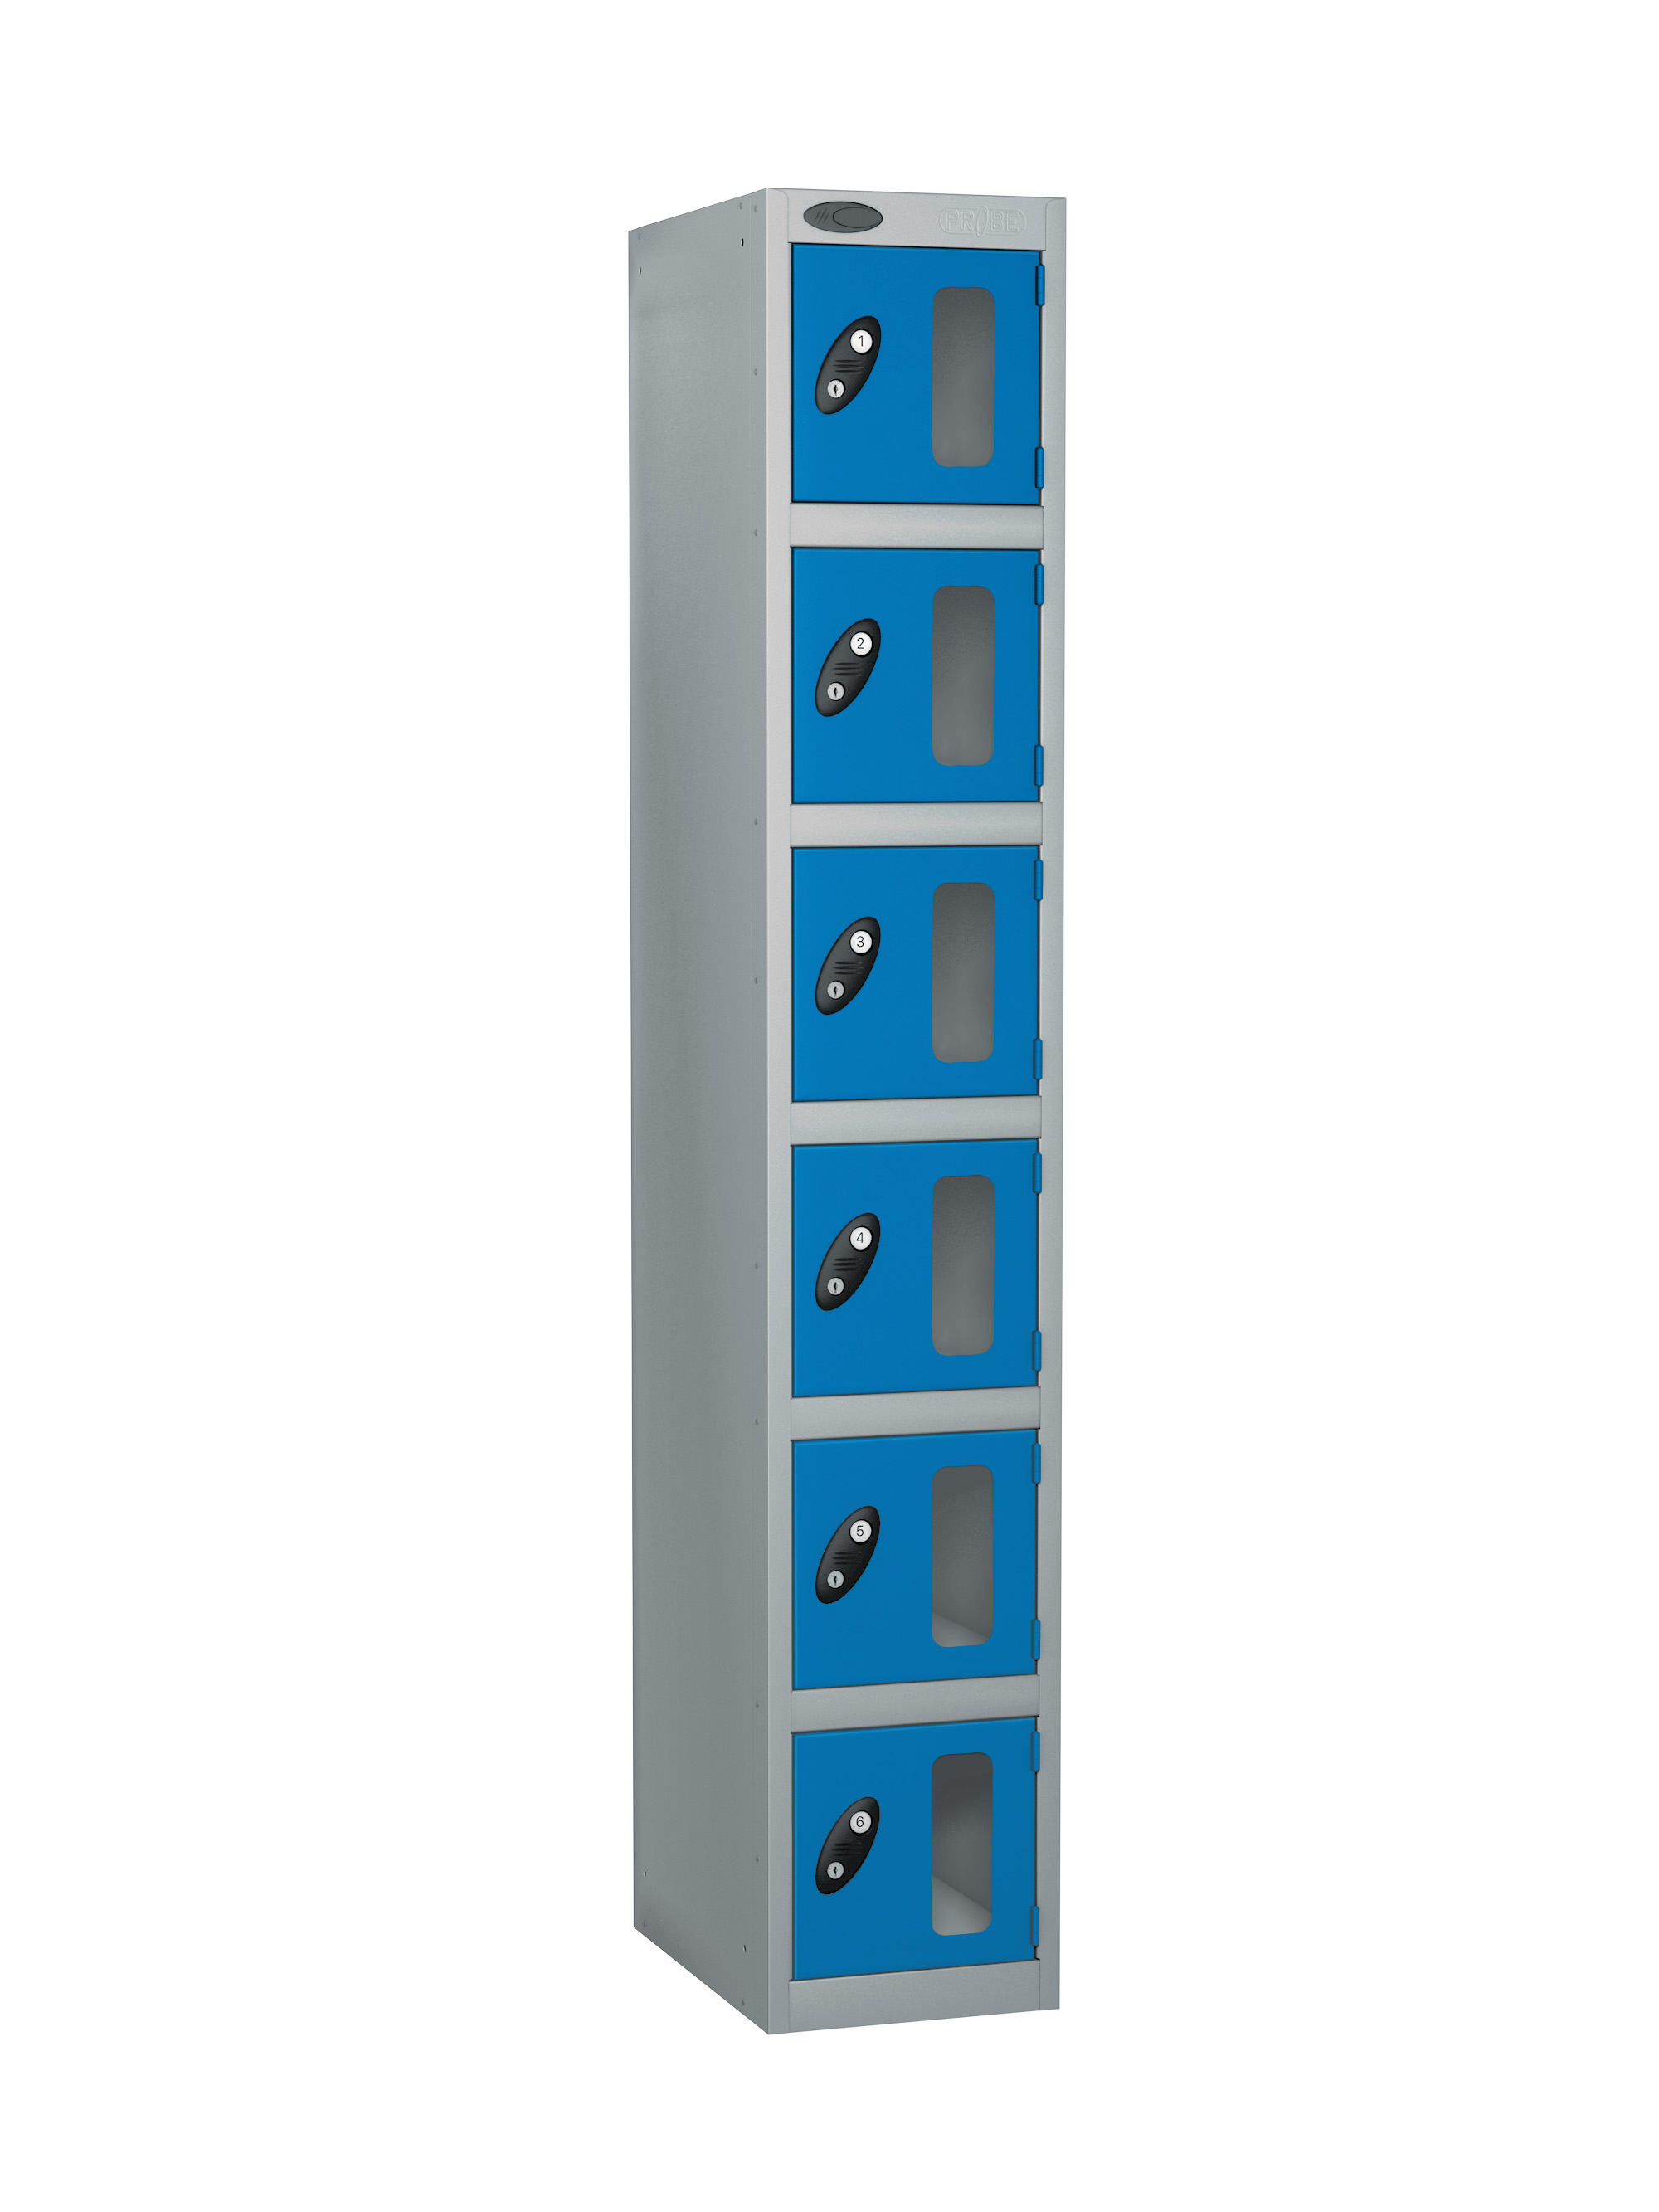 Probe 6 doors vision panel anti-stock theft locker blue